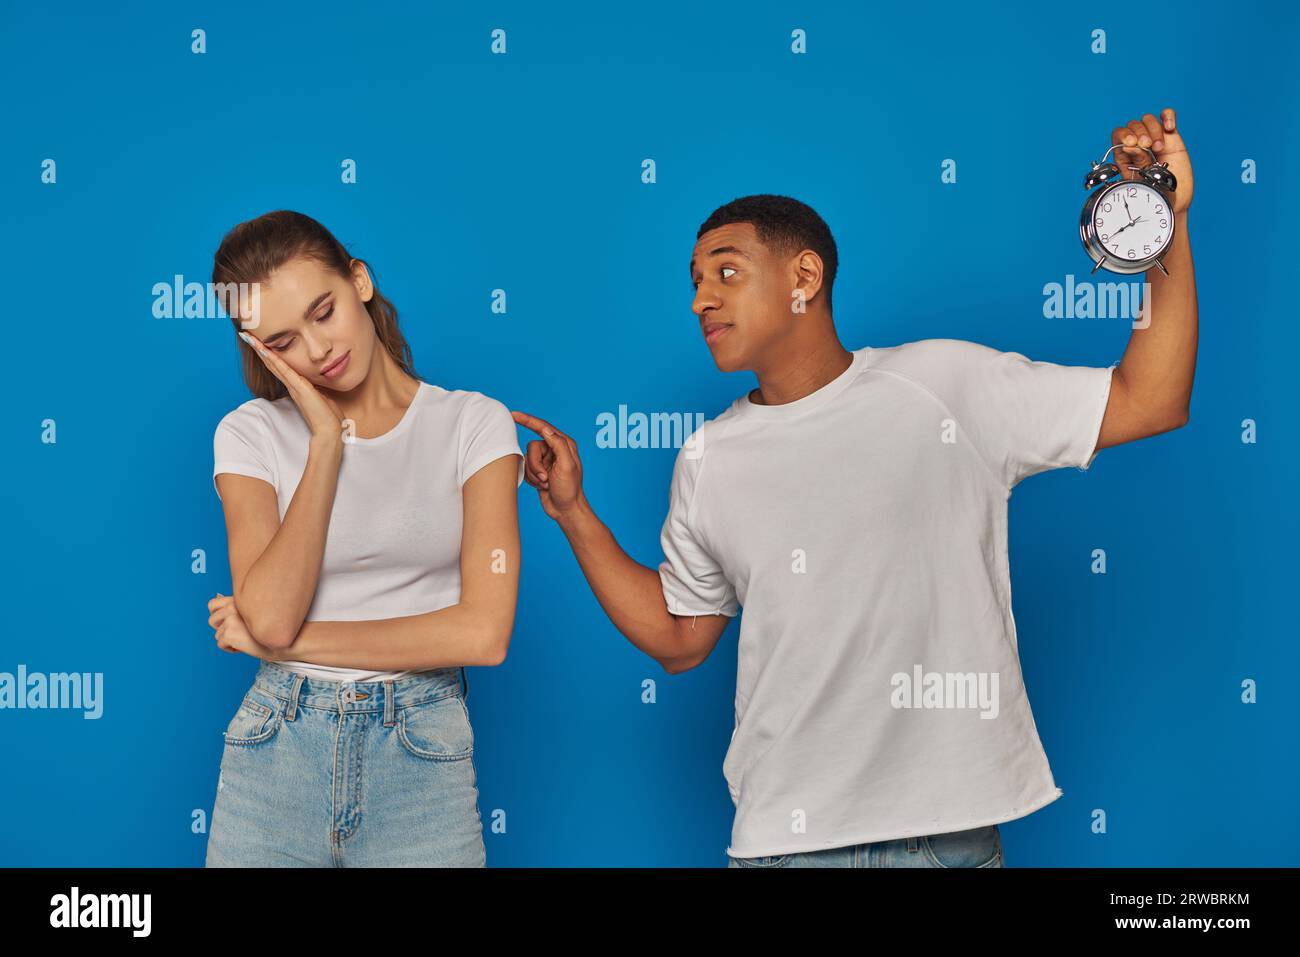 awaken african american man holding alarm clock and waking up sleepy woman on blue backdrop Stock Photo